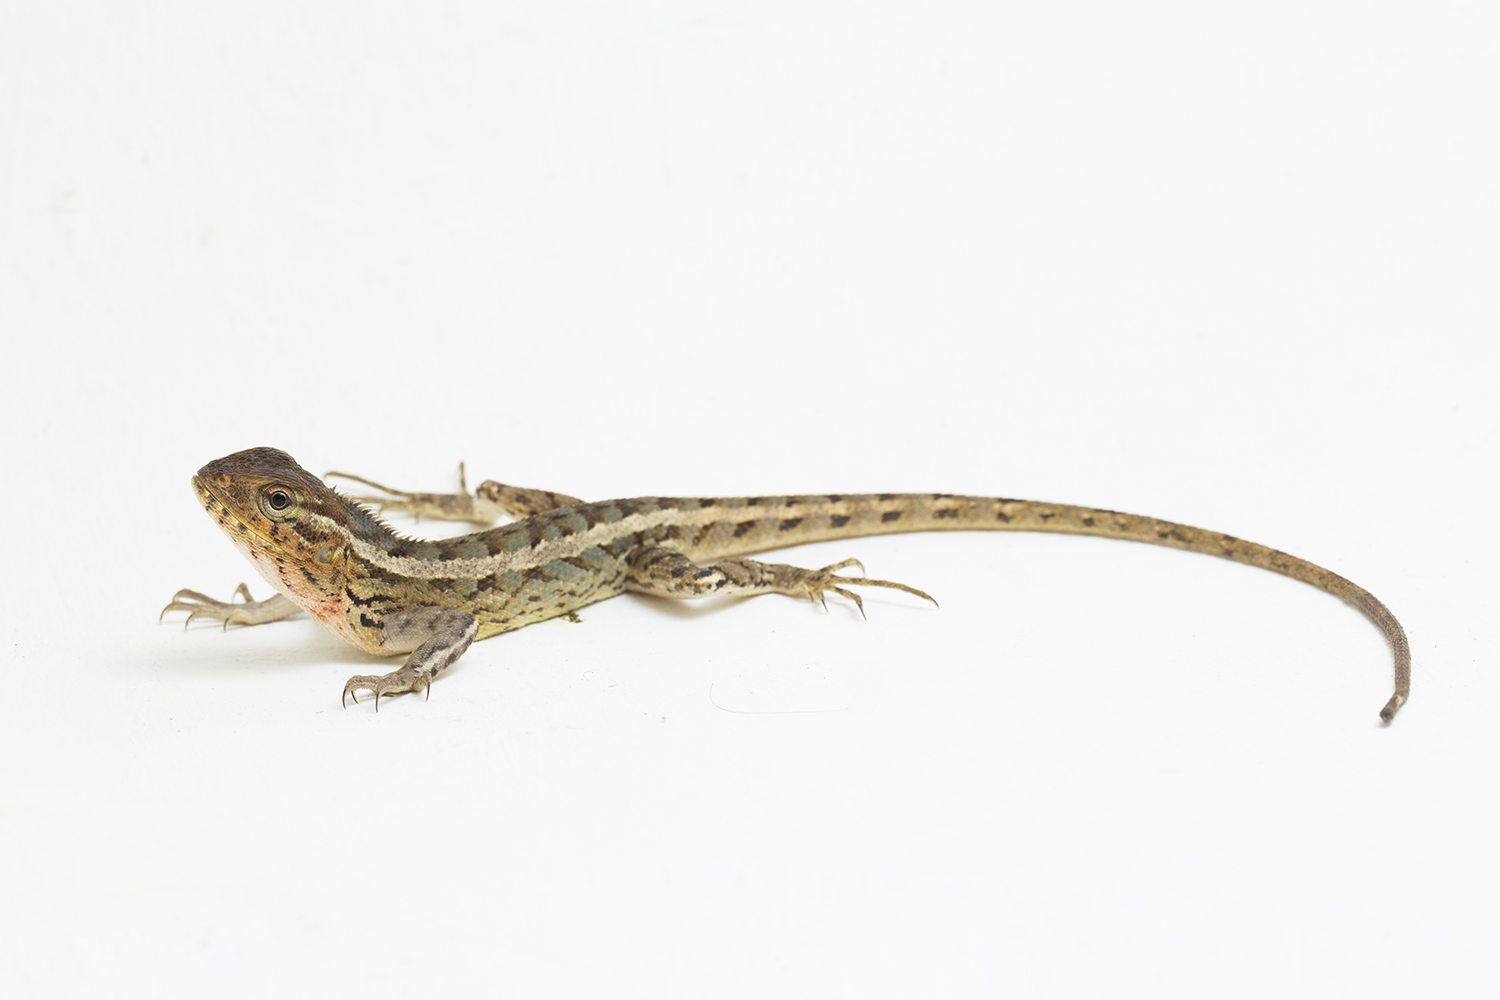 oriental-garden-lizard-calotes-versicolor-isolated-white-background